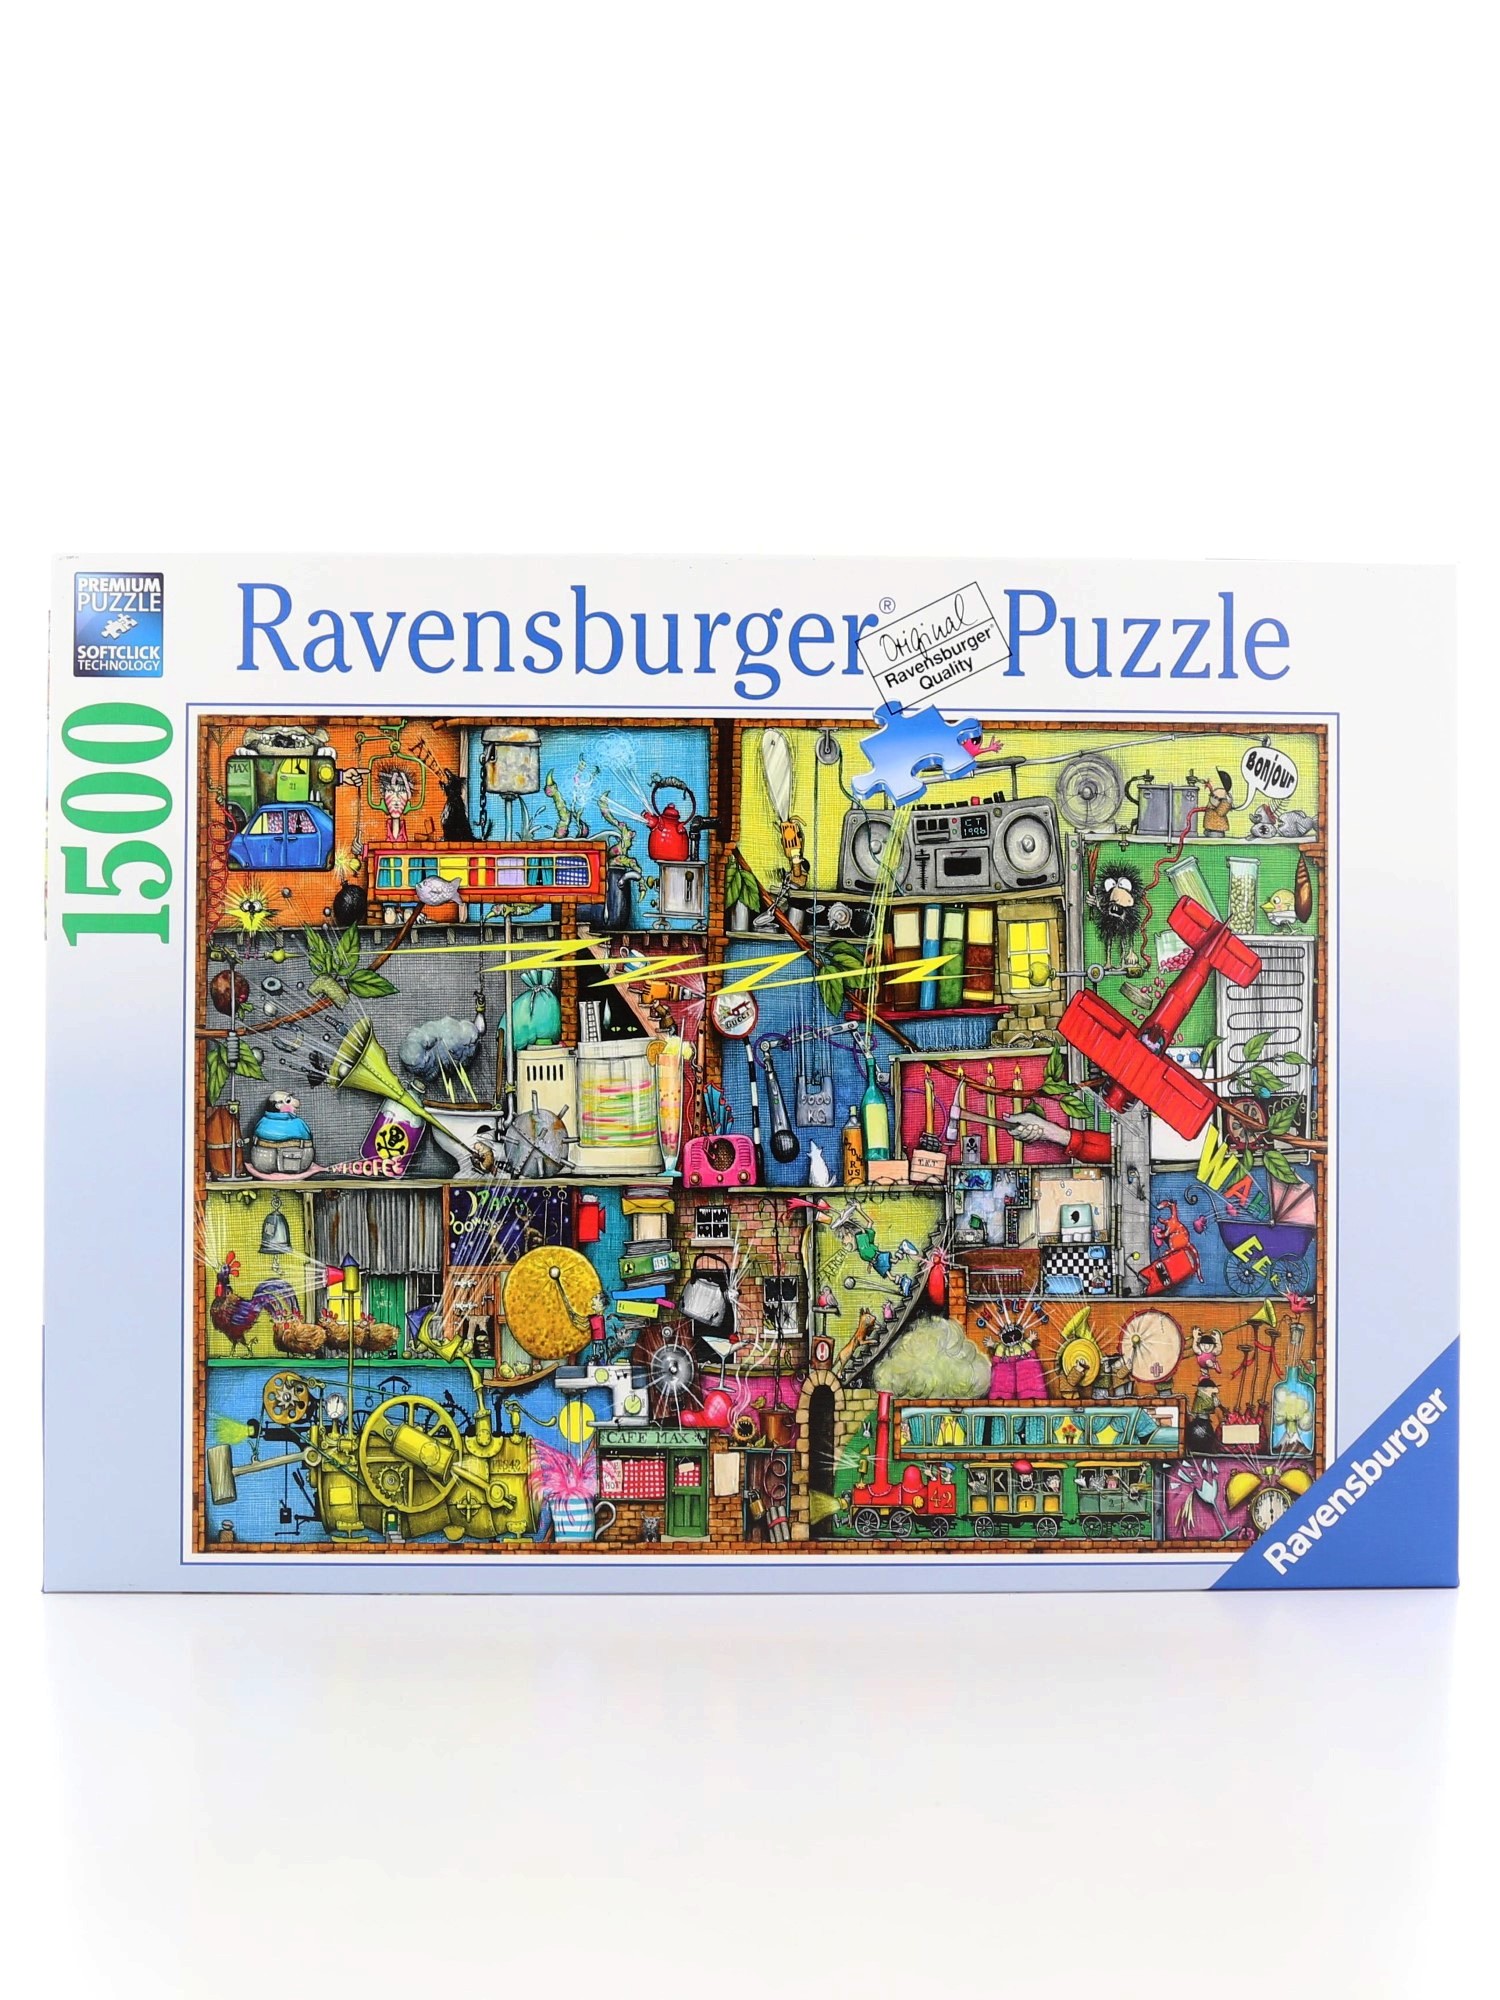 Ravensburger Cling Clang Clatter 1500 Pcs Jigsaw Puzzle